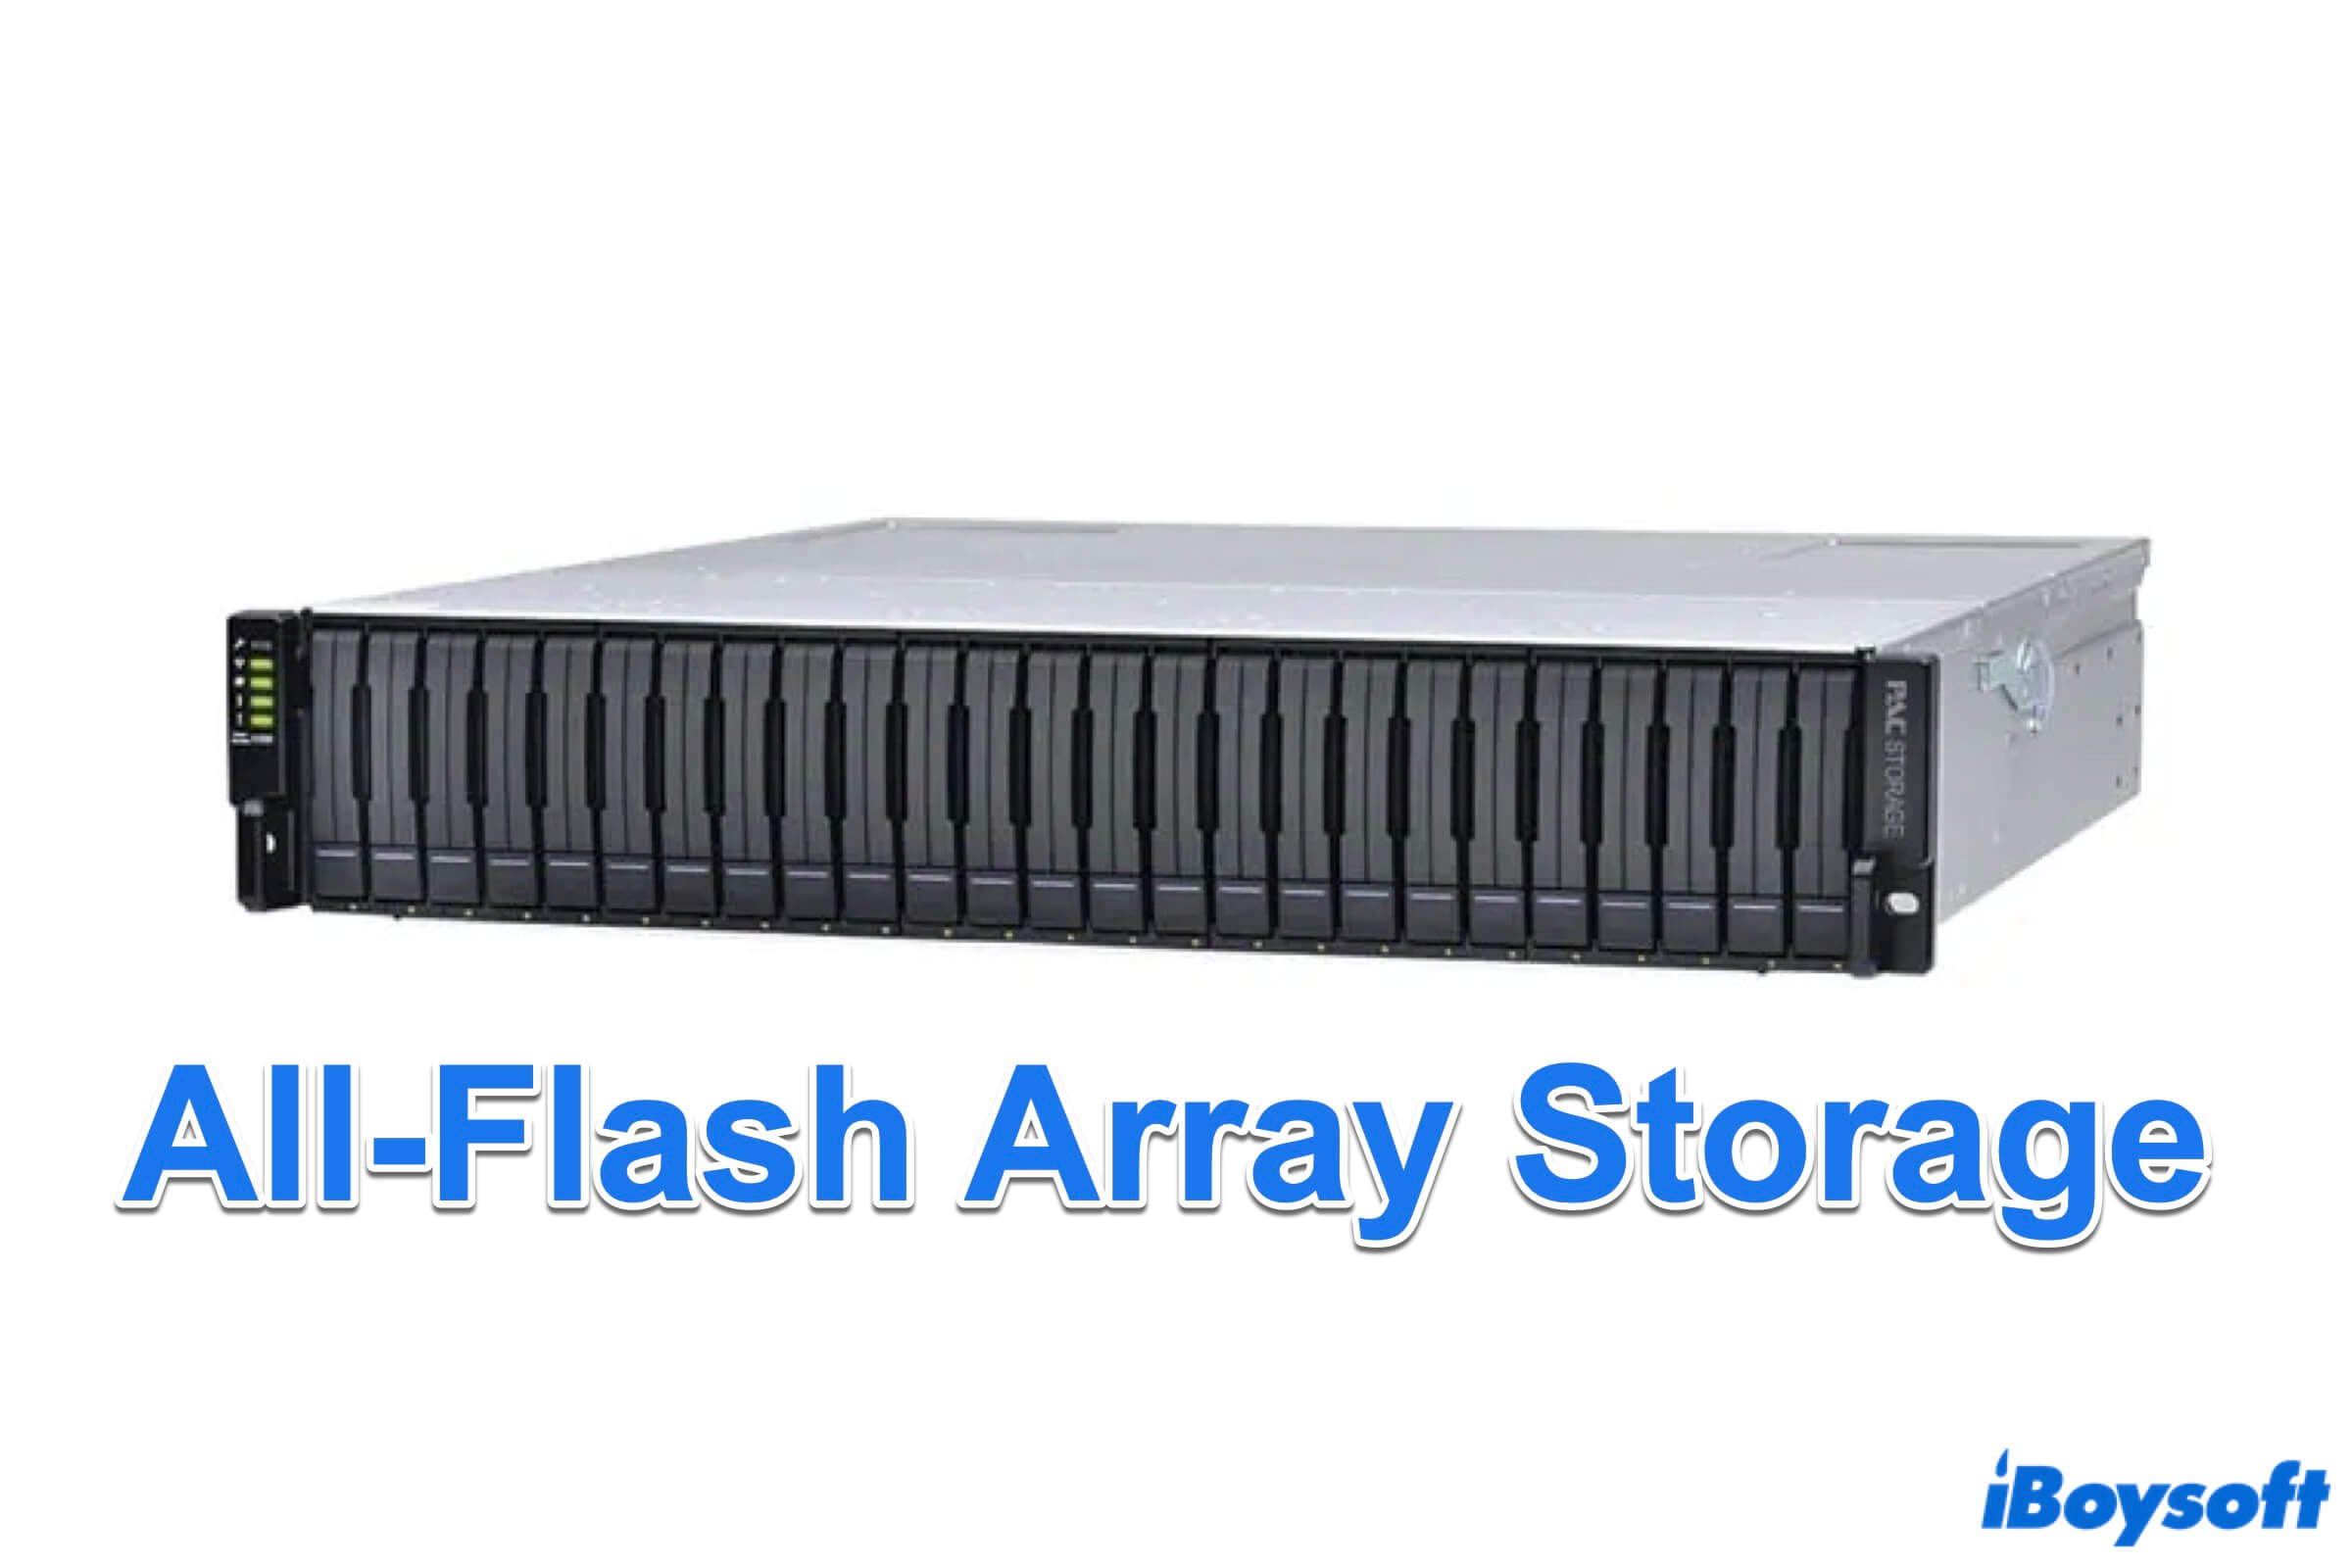 Summary of All Flash Array